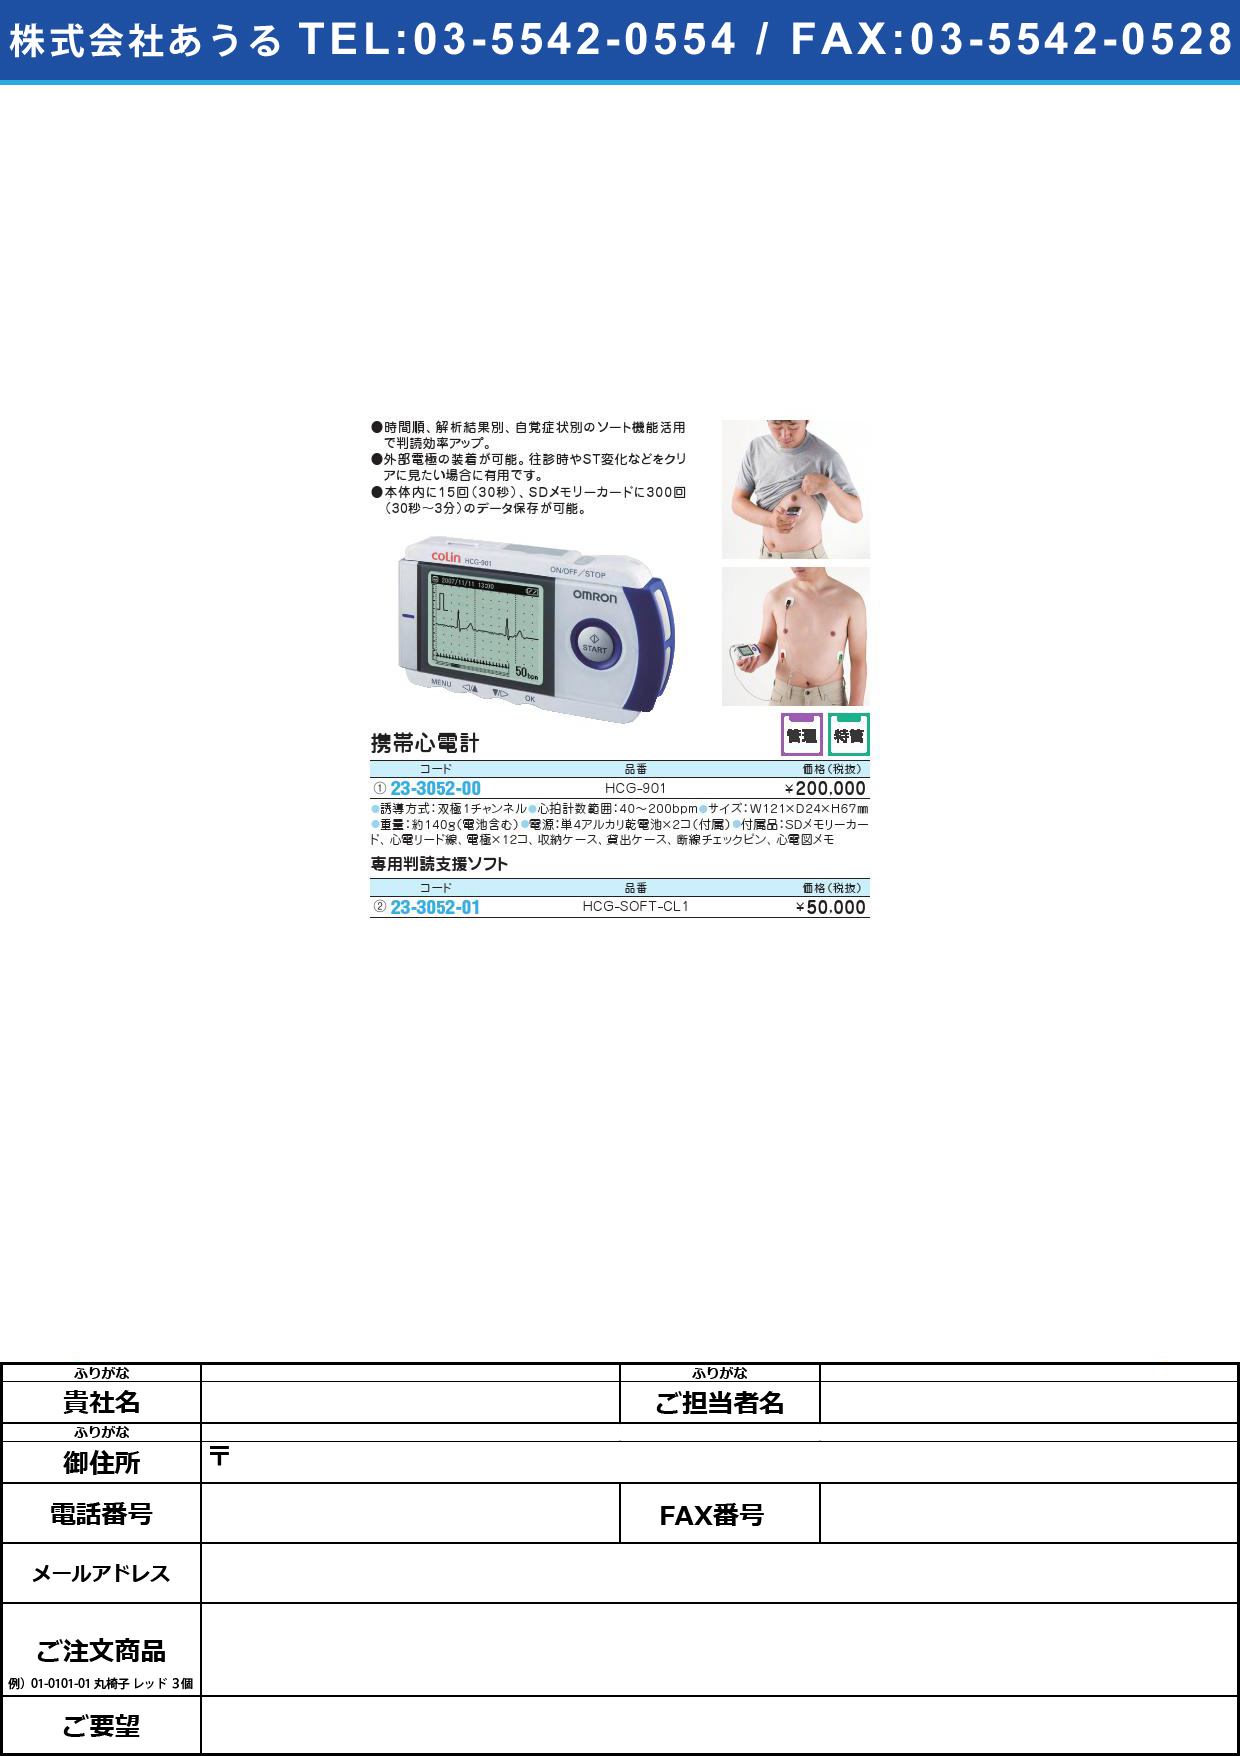 (23-3052-00)携帯心電計 HCG-901ｹｲﾀｲｼﾝﾃﾞﾝｹｲ(23-3052-00)【1台単位】【2013年カタログ商品】